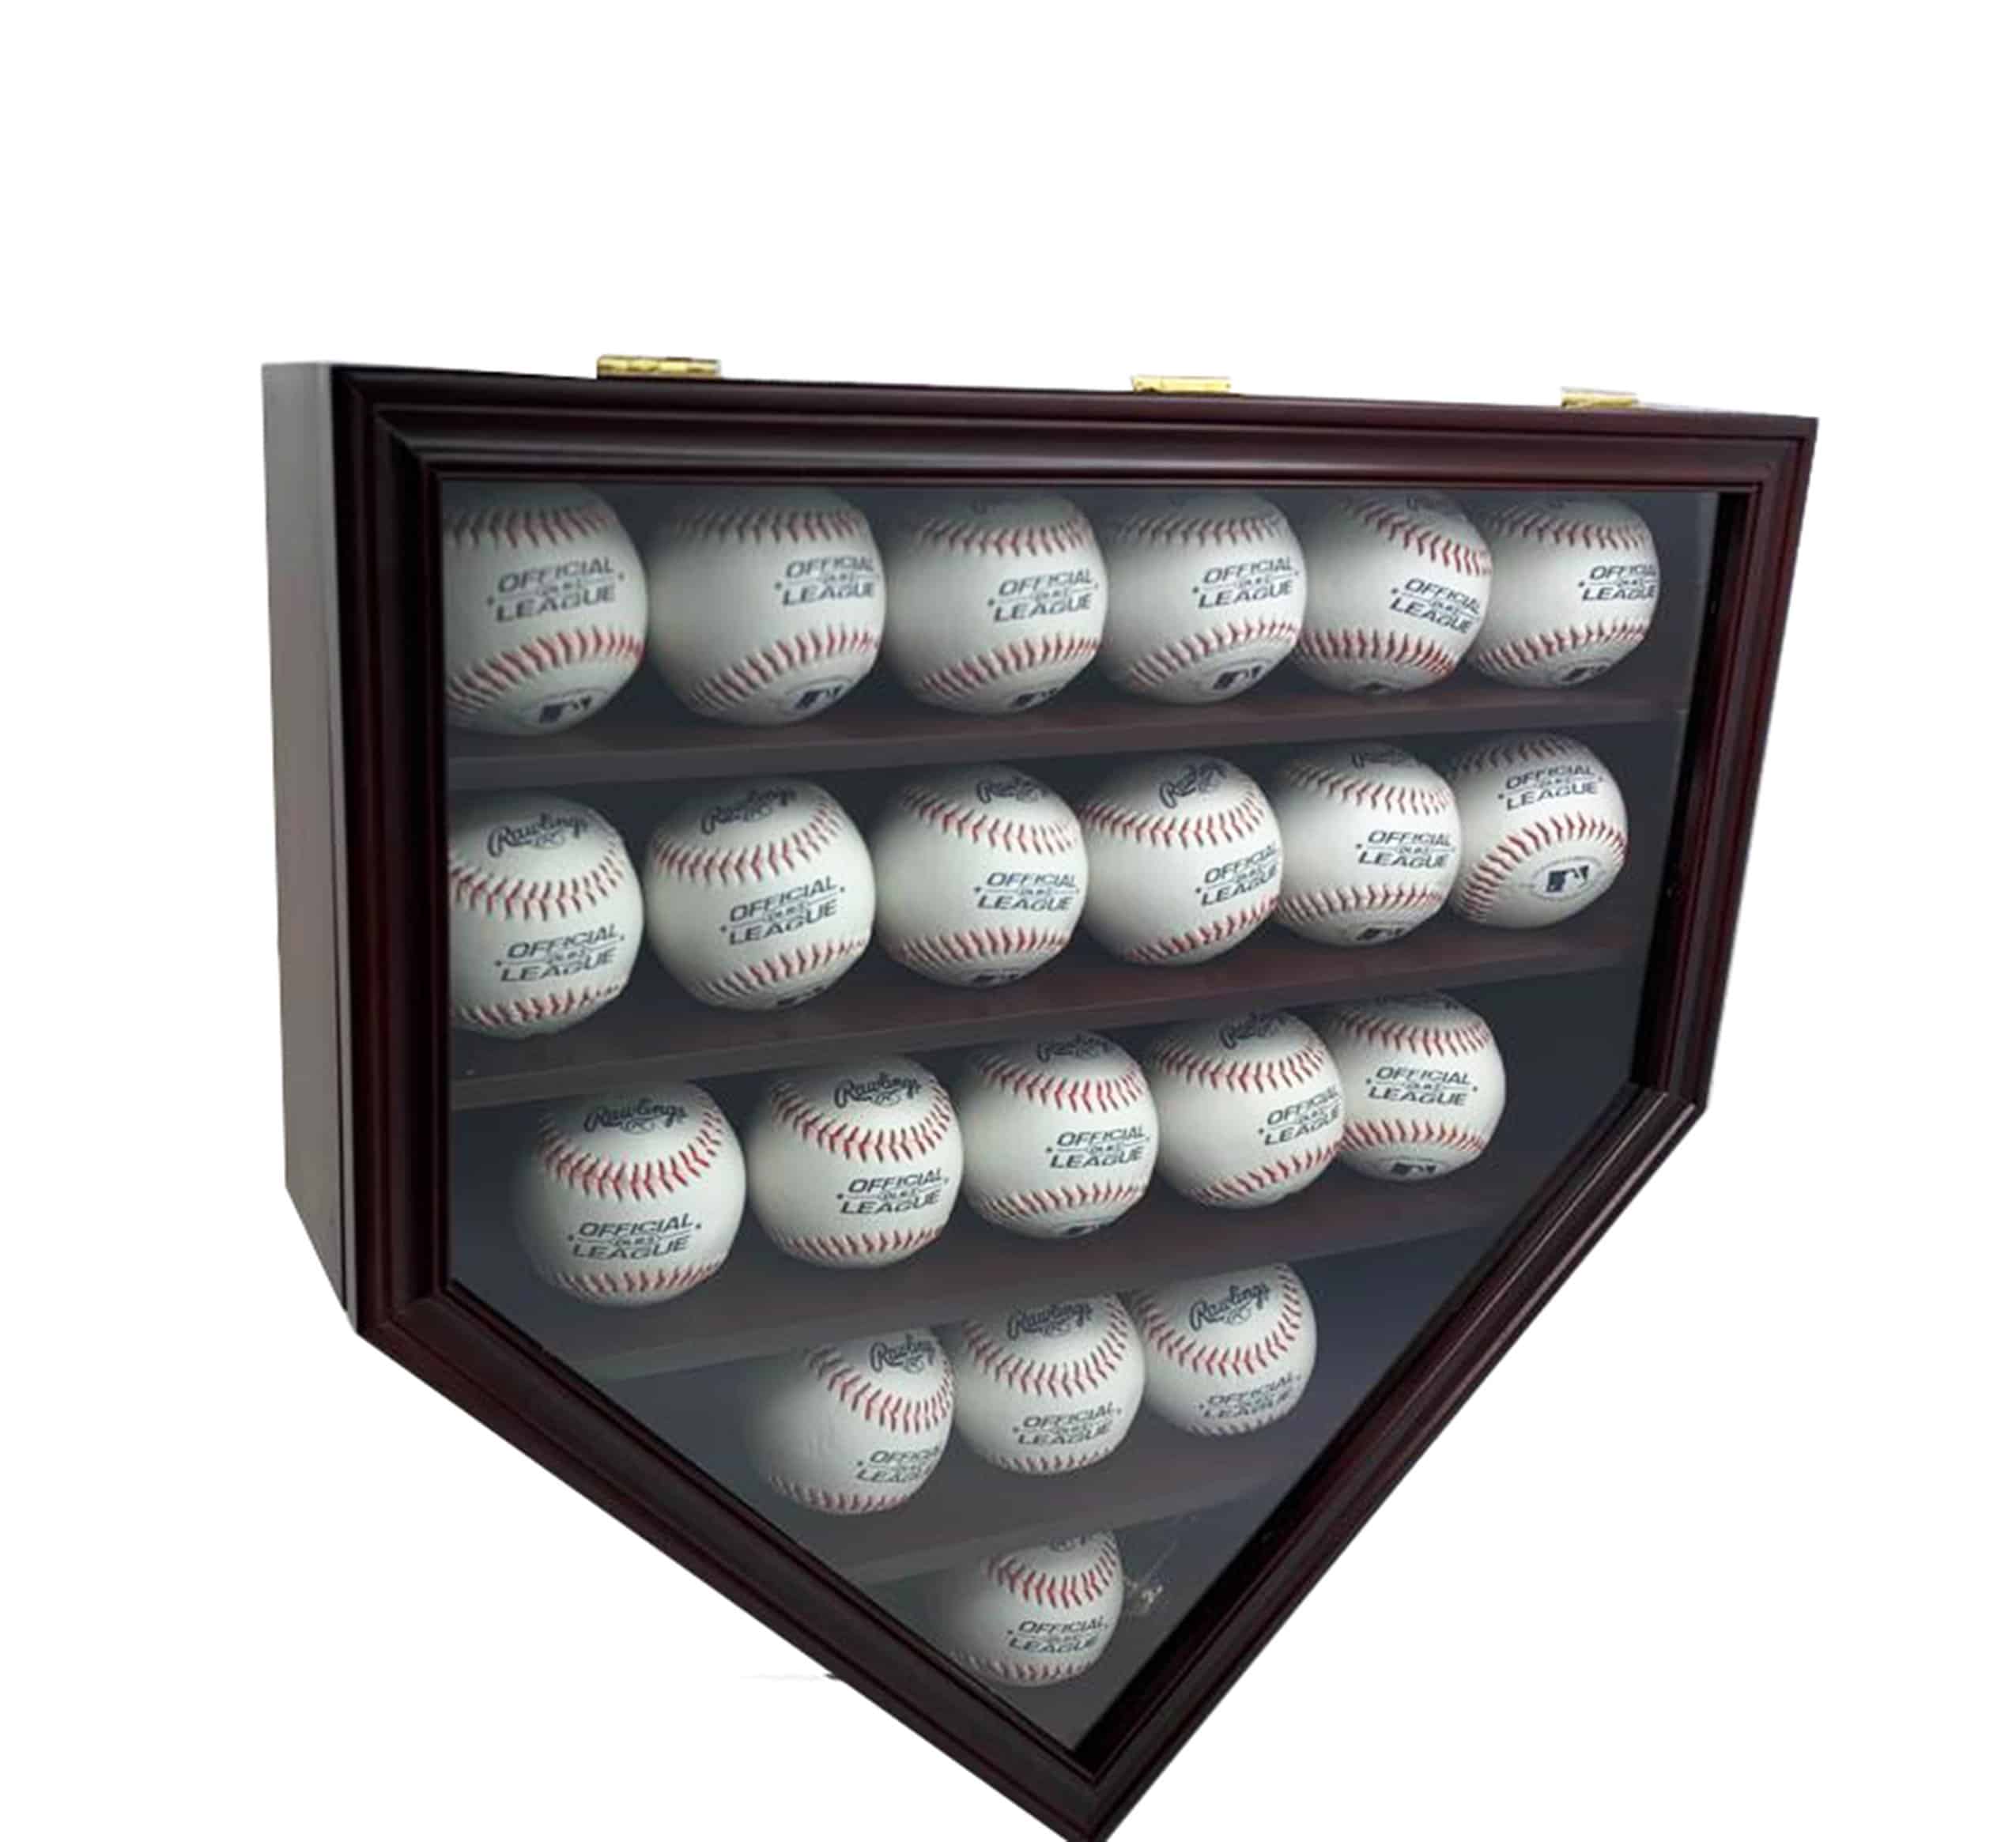  21 Baseball Display Case (Solid Wood)  Wall Cabinet Holder  2